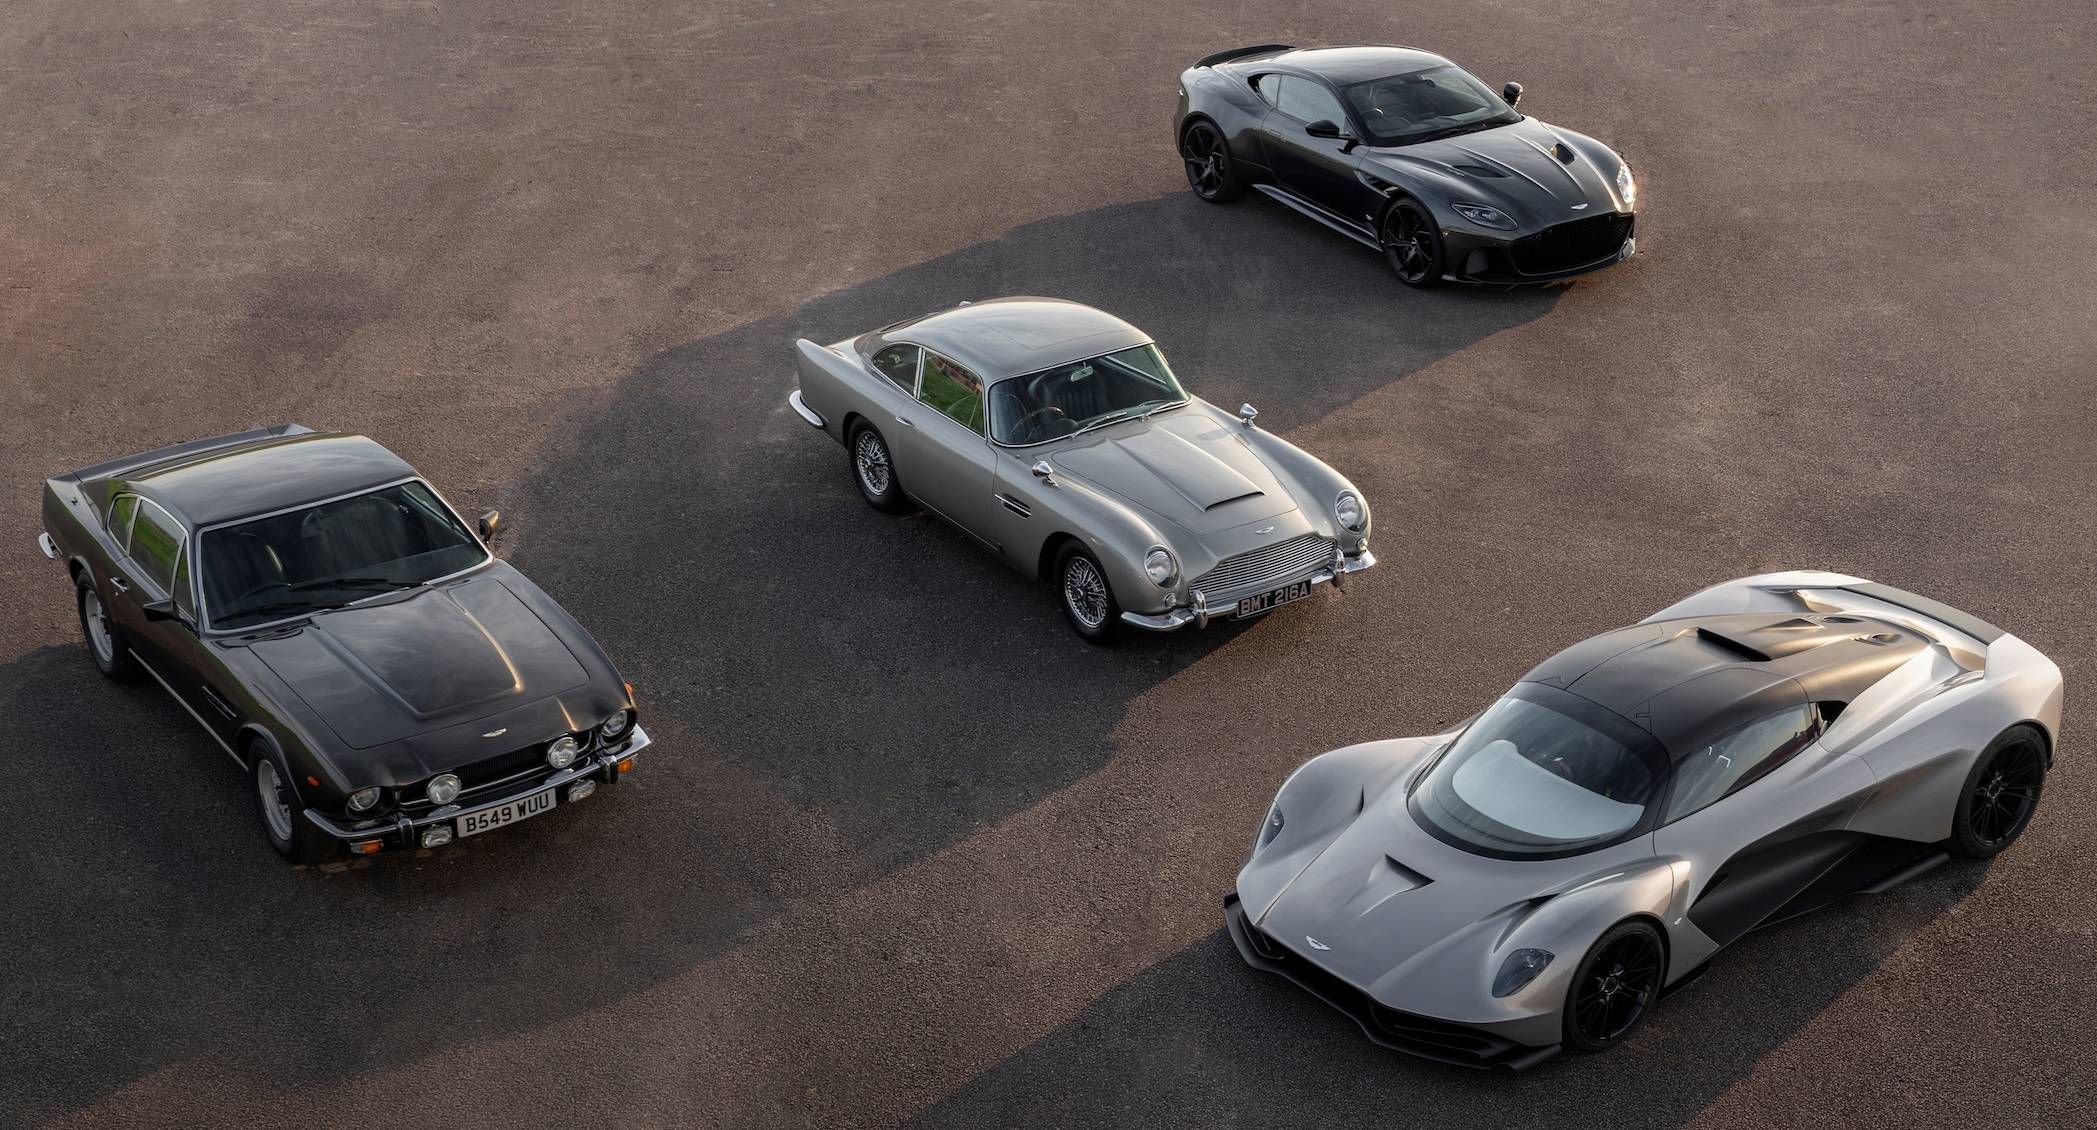 Aston Martin 1964 DB5, 1987 Vantage V8, DBS Superleggura, and Valhalla on set of No Time To Die 007 James Bond